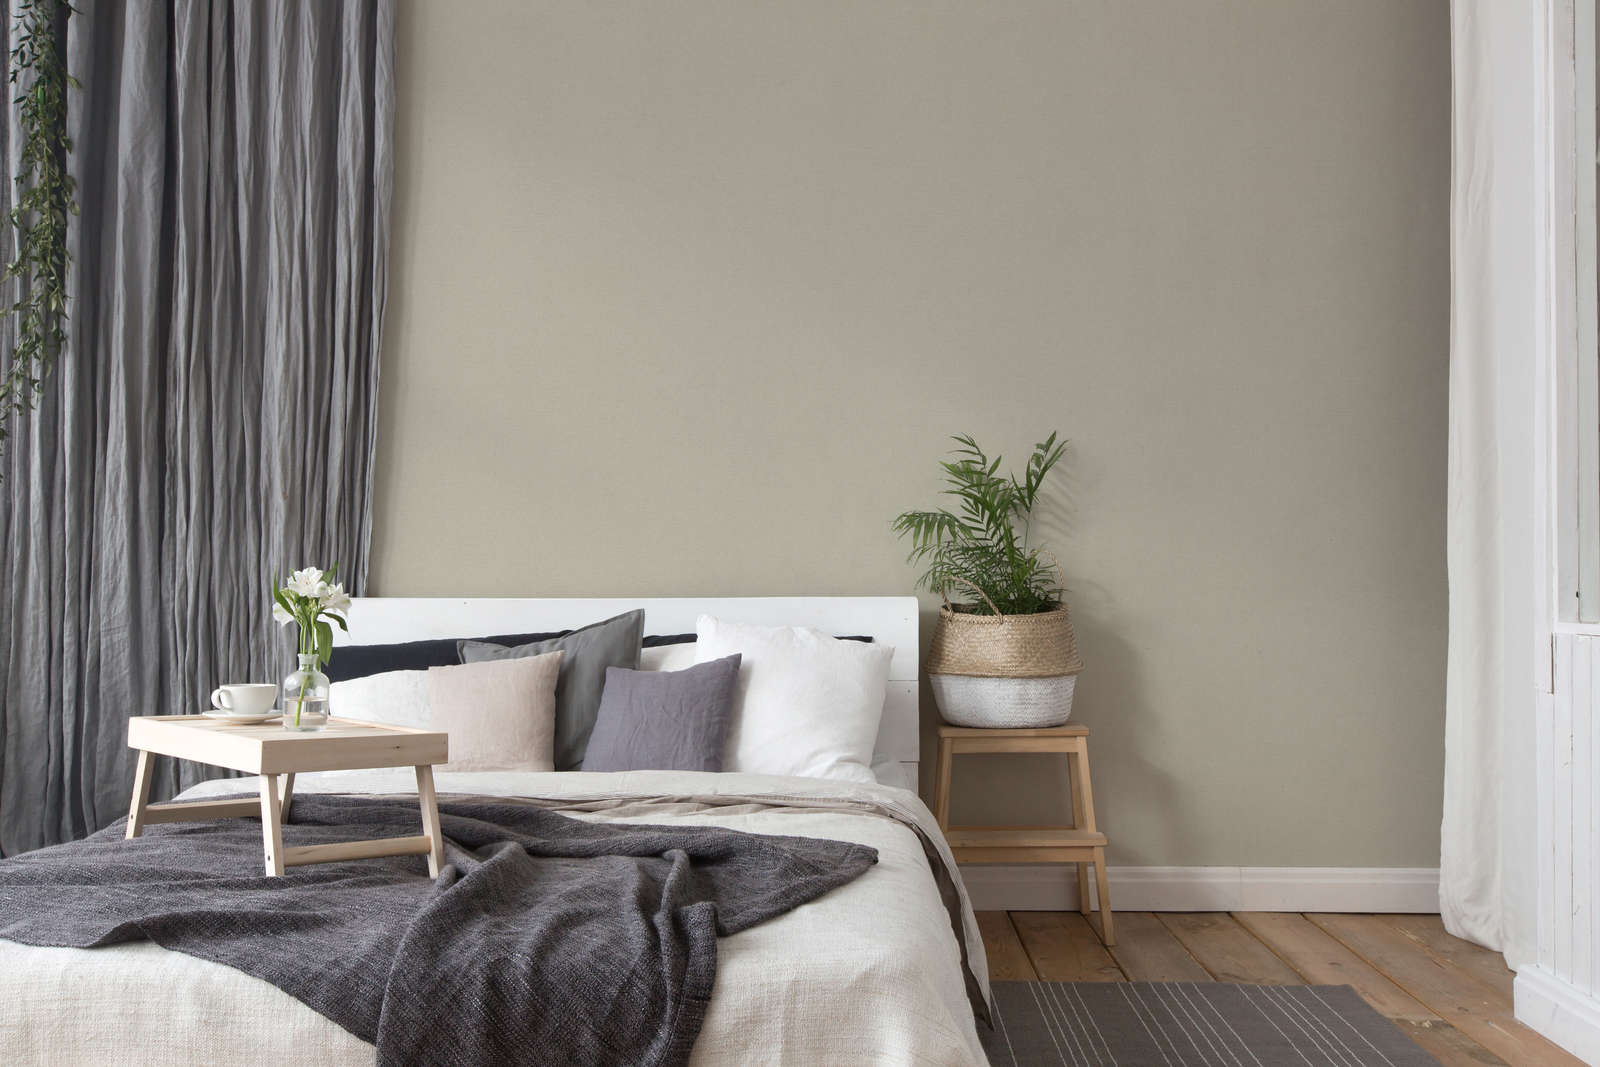             Linen look wallpaper beige with mottled textile texture
        